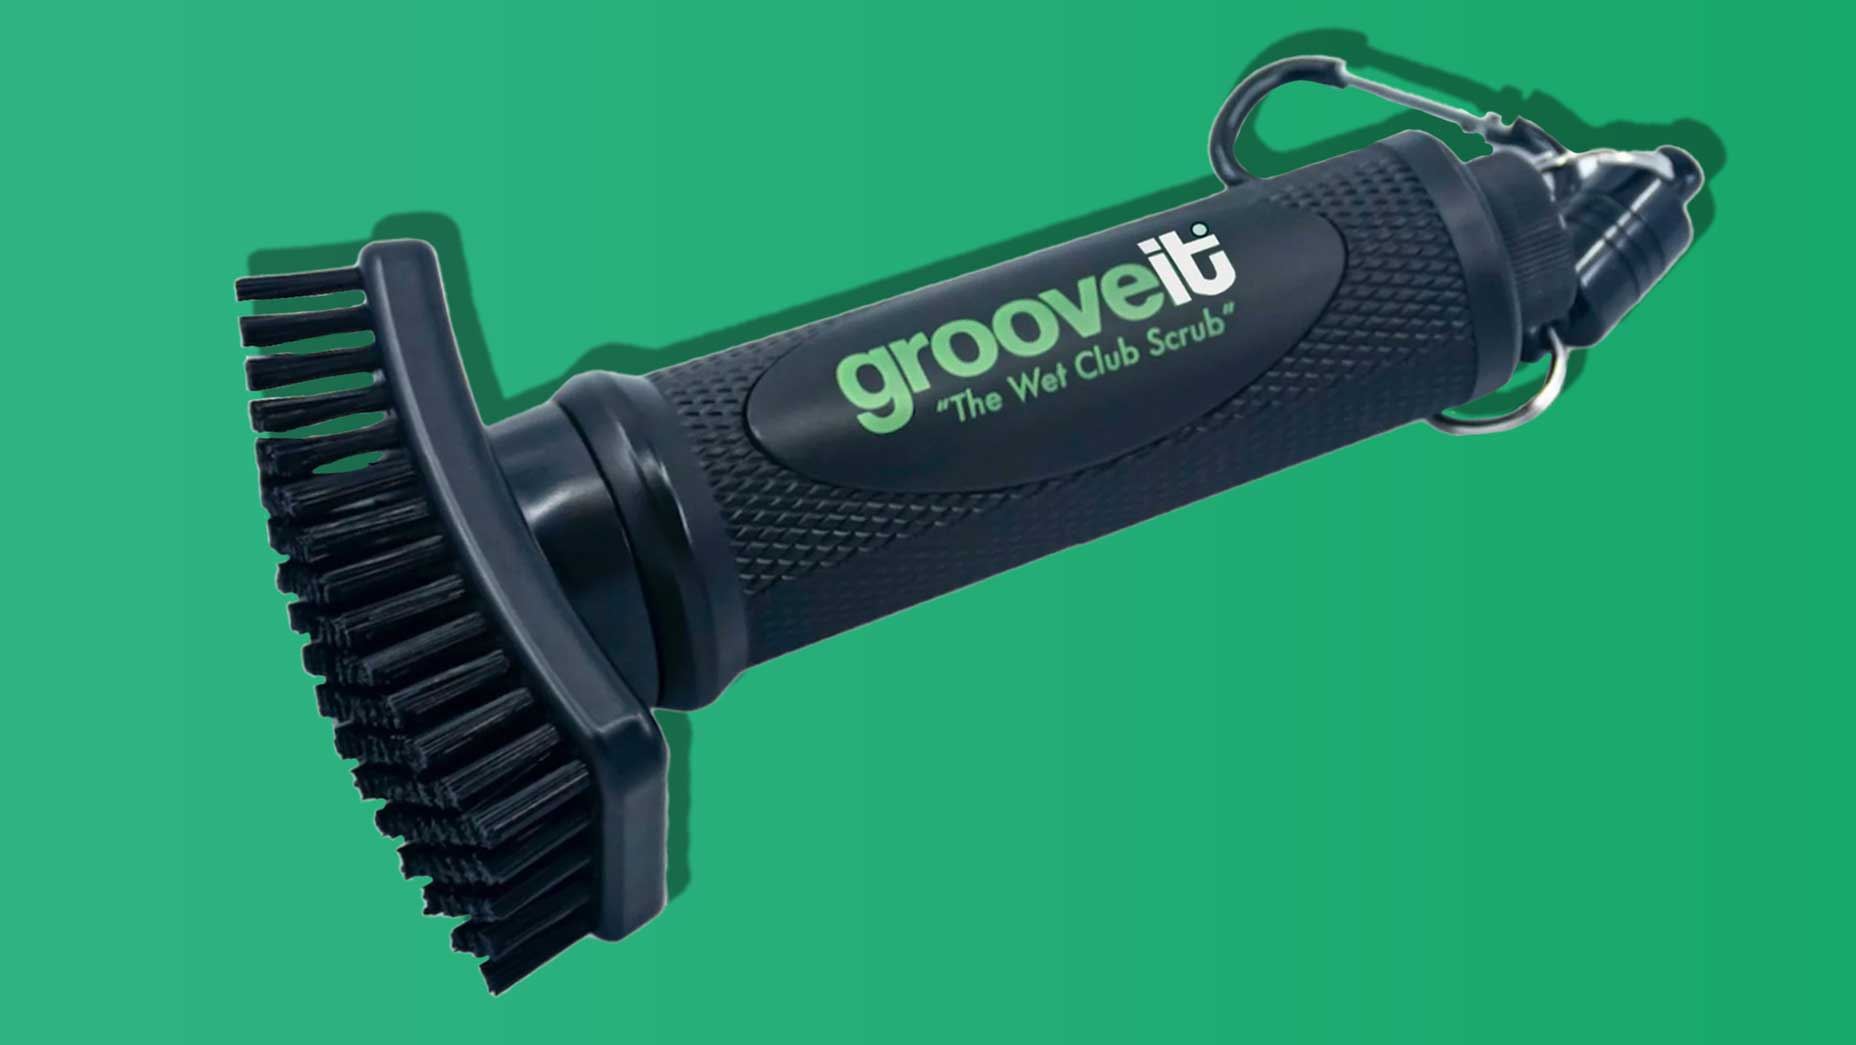 Grooveit The Wet Club Scrub Golf Club Cleaning Brush 